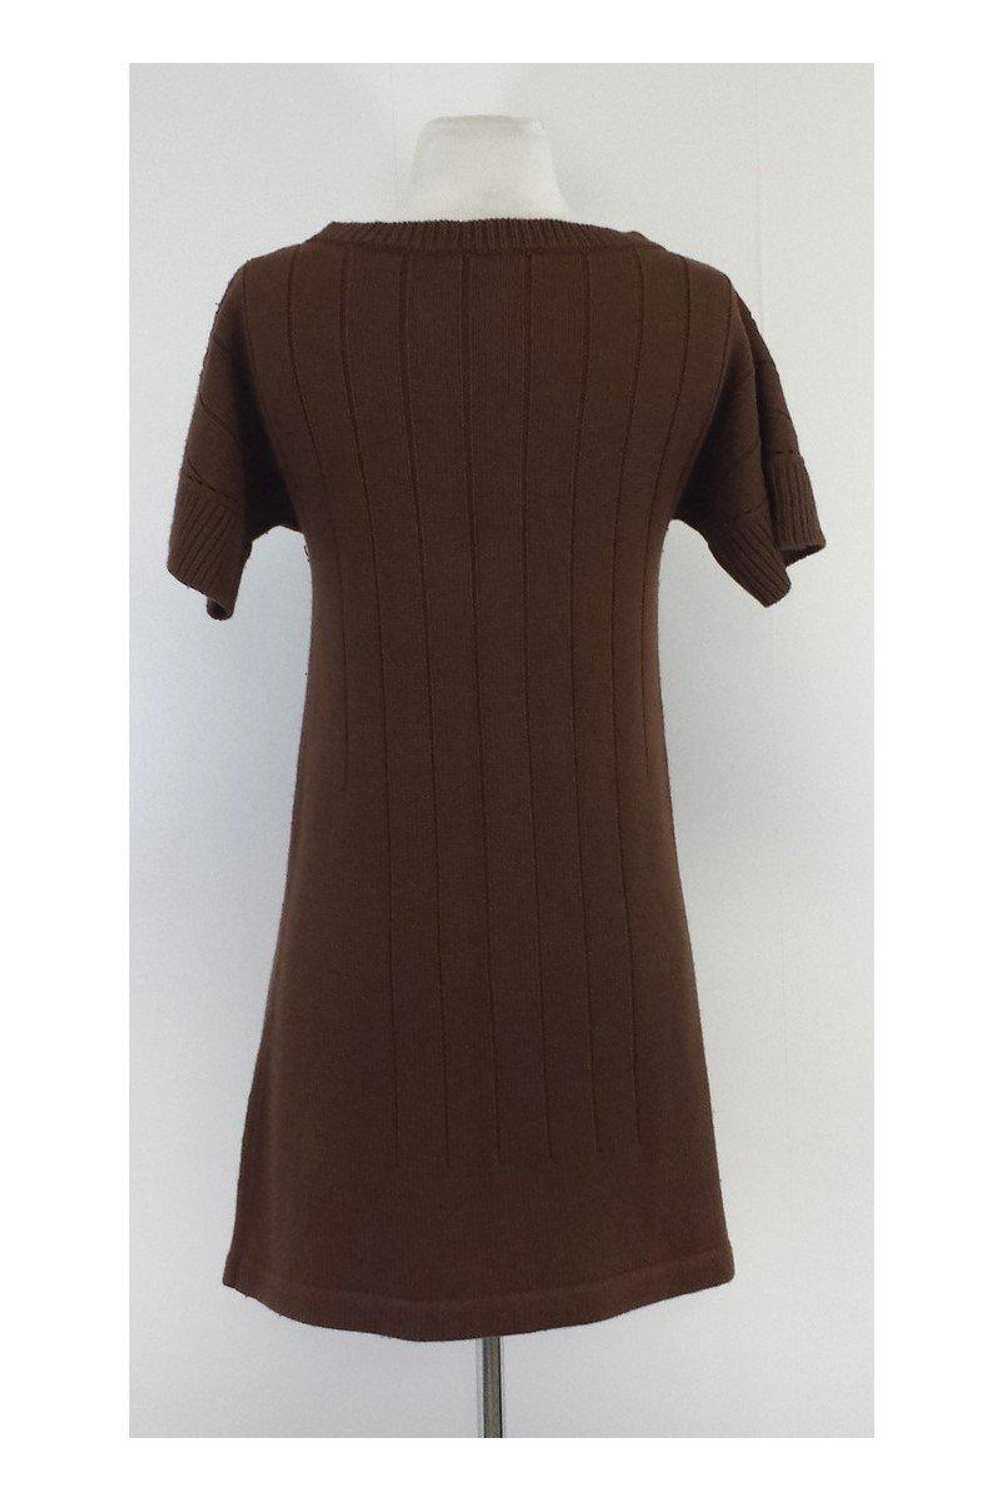 Mayle - Brown Short Sleeve Sweater Dress Sz S - image 3